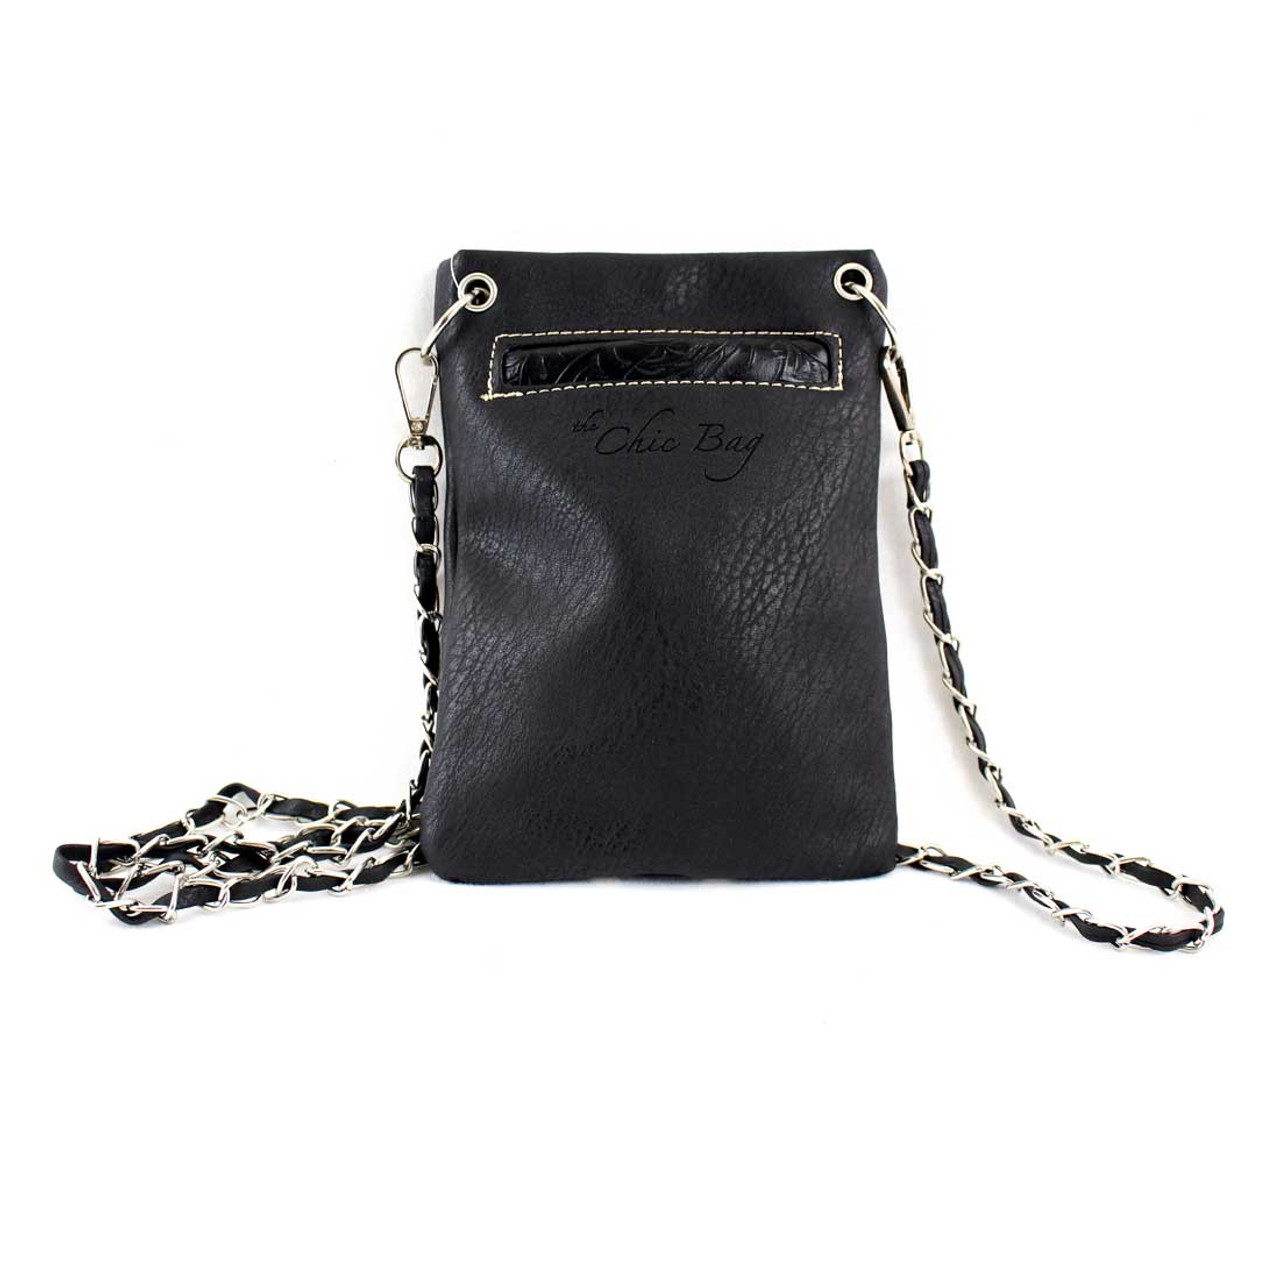 The FashionPuzzle Triple Zip Crossbody Bag Is 20% Off on Amazon